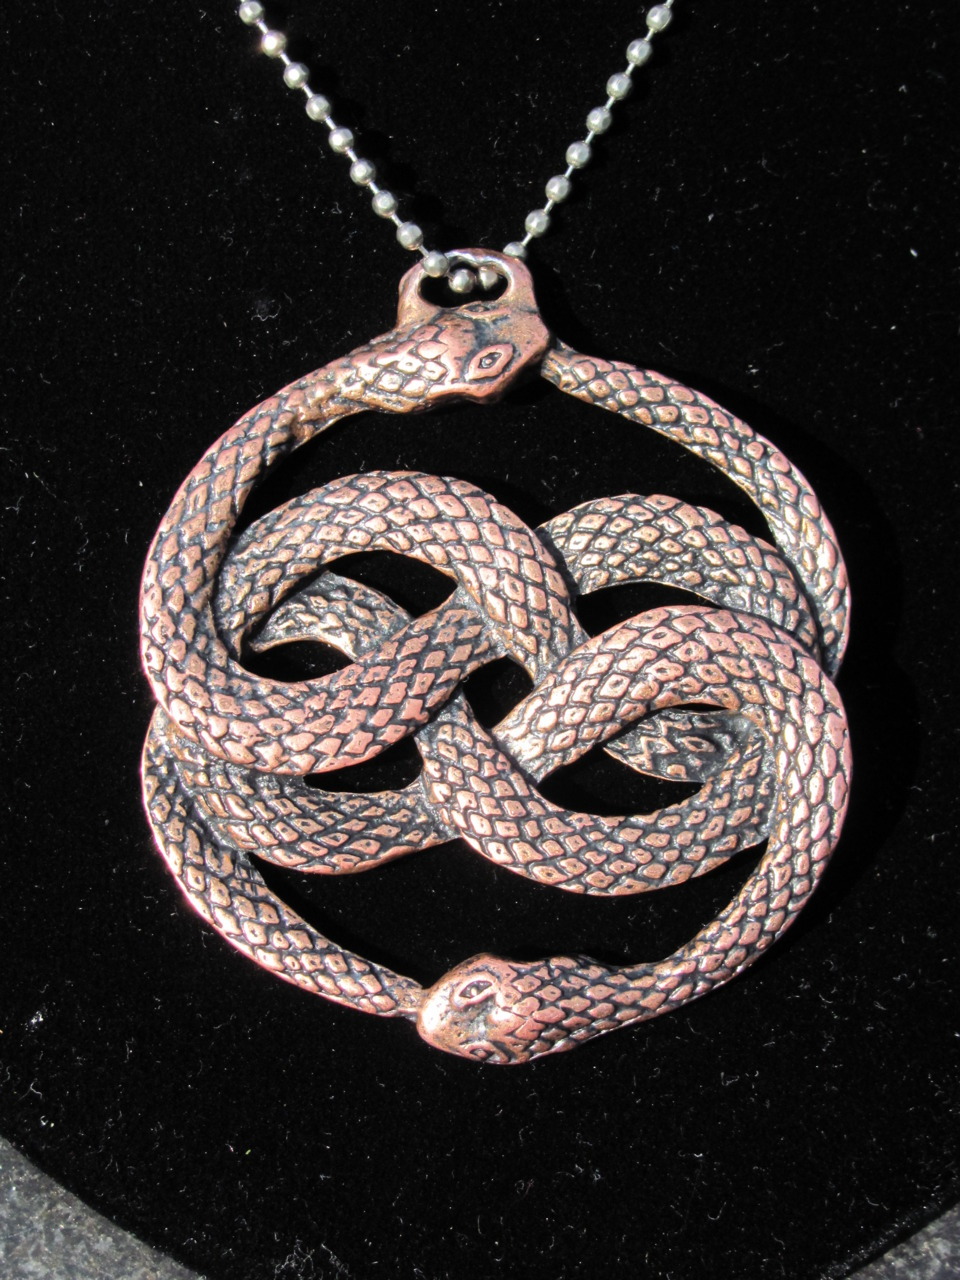 Neverending story Snake Pendant Necklace Bastian Bux Orin The Aurin Atreyu  Infinite Endless Jewelry - AliExpress